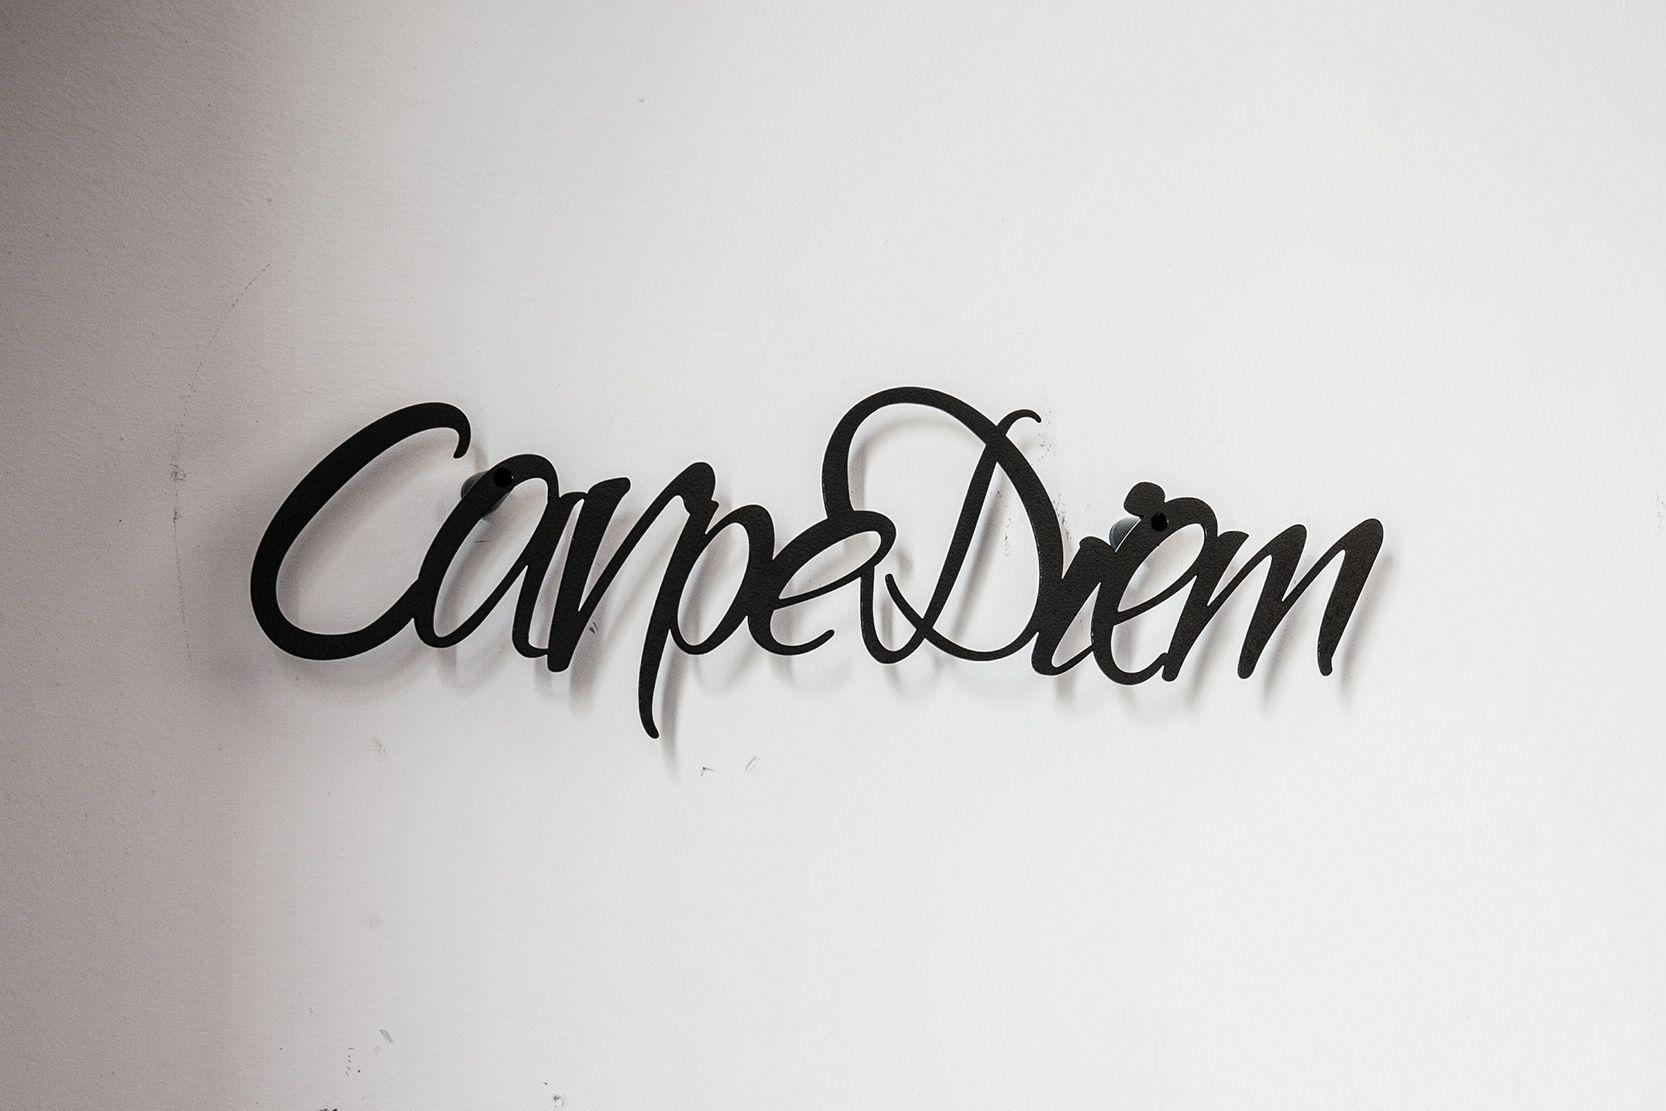 Carpe Diem Wallpaper, Grab the 1080p full-res here: feed.th…